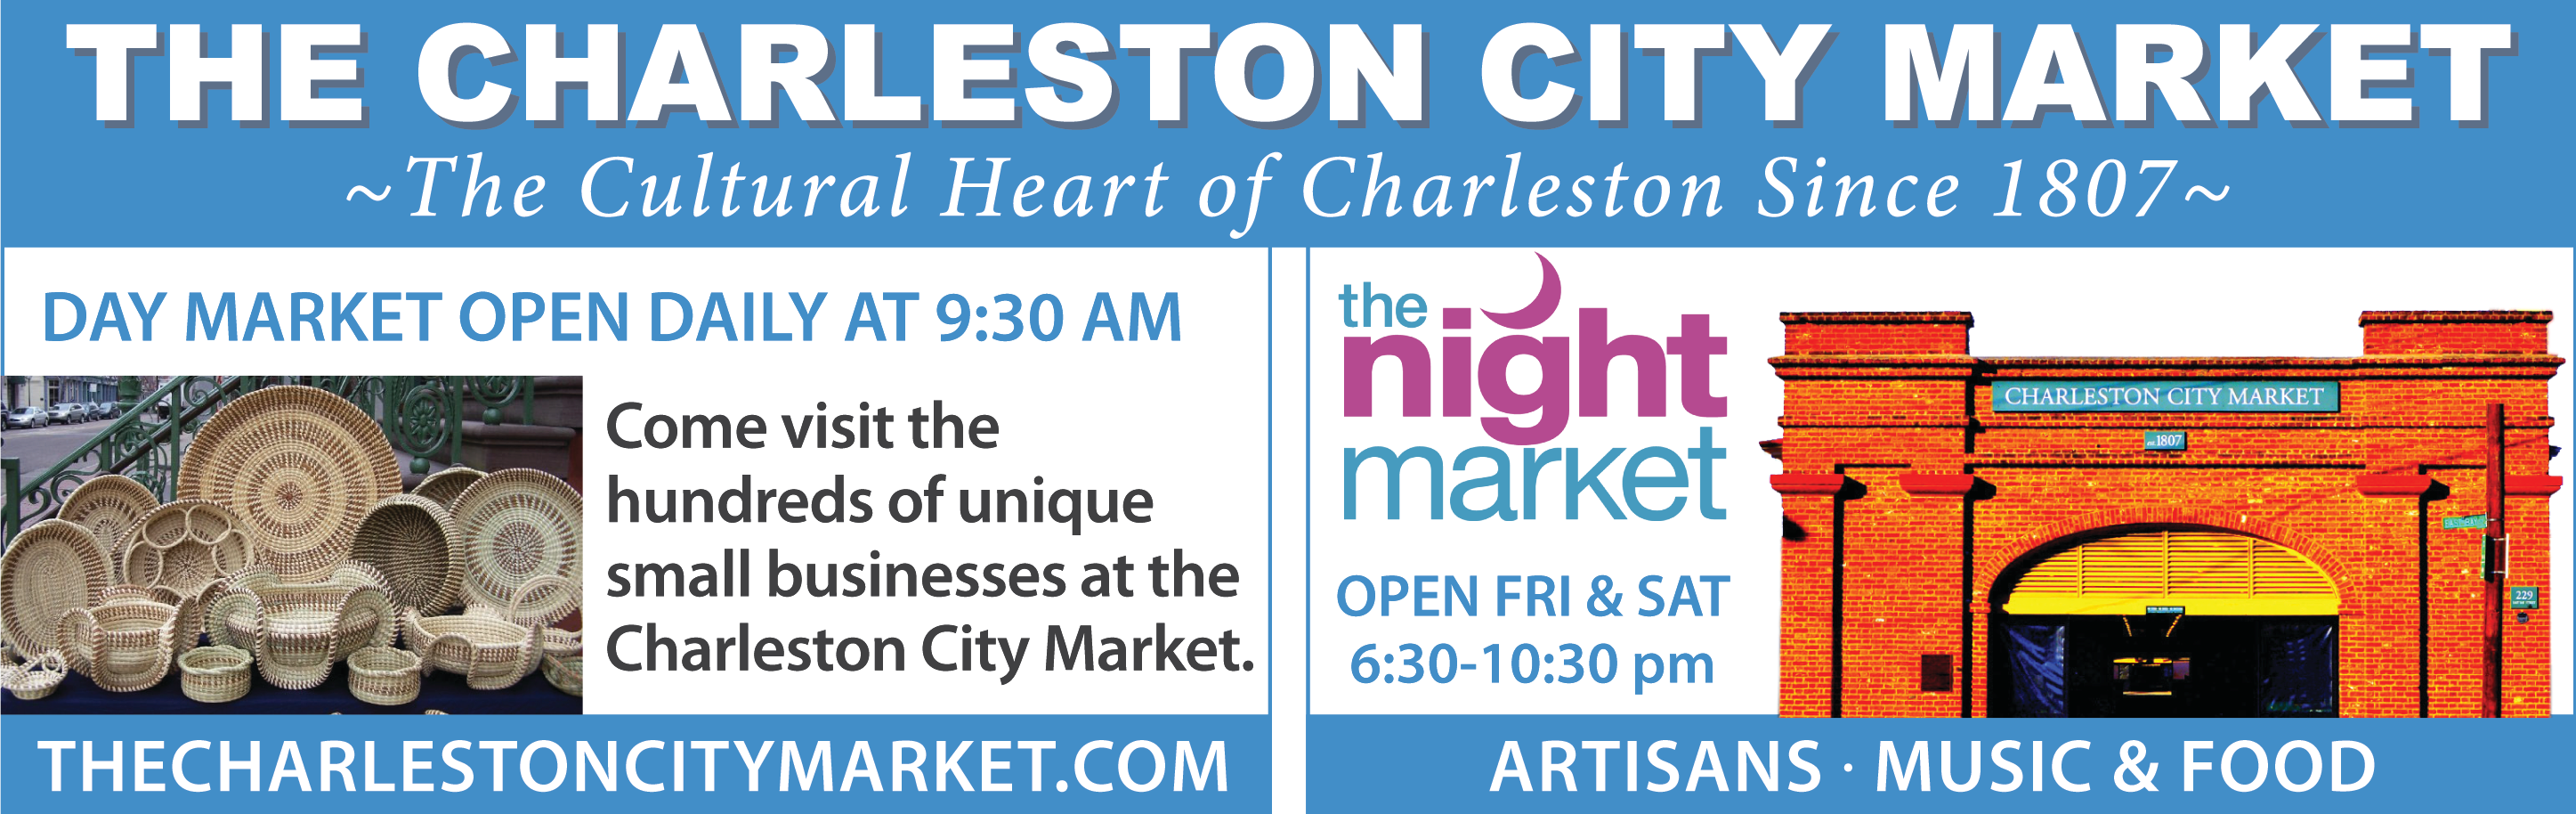 The Charleston City Market Print Ad